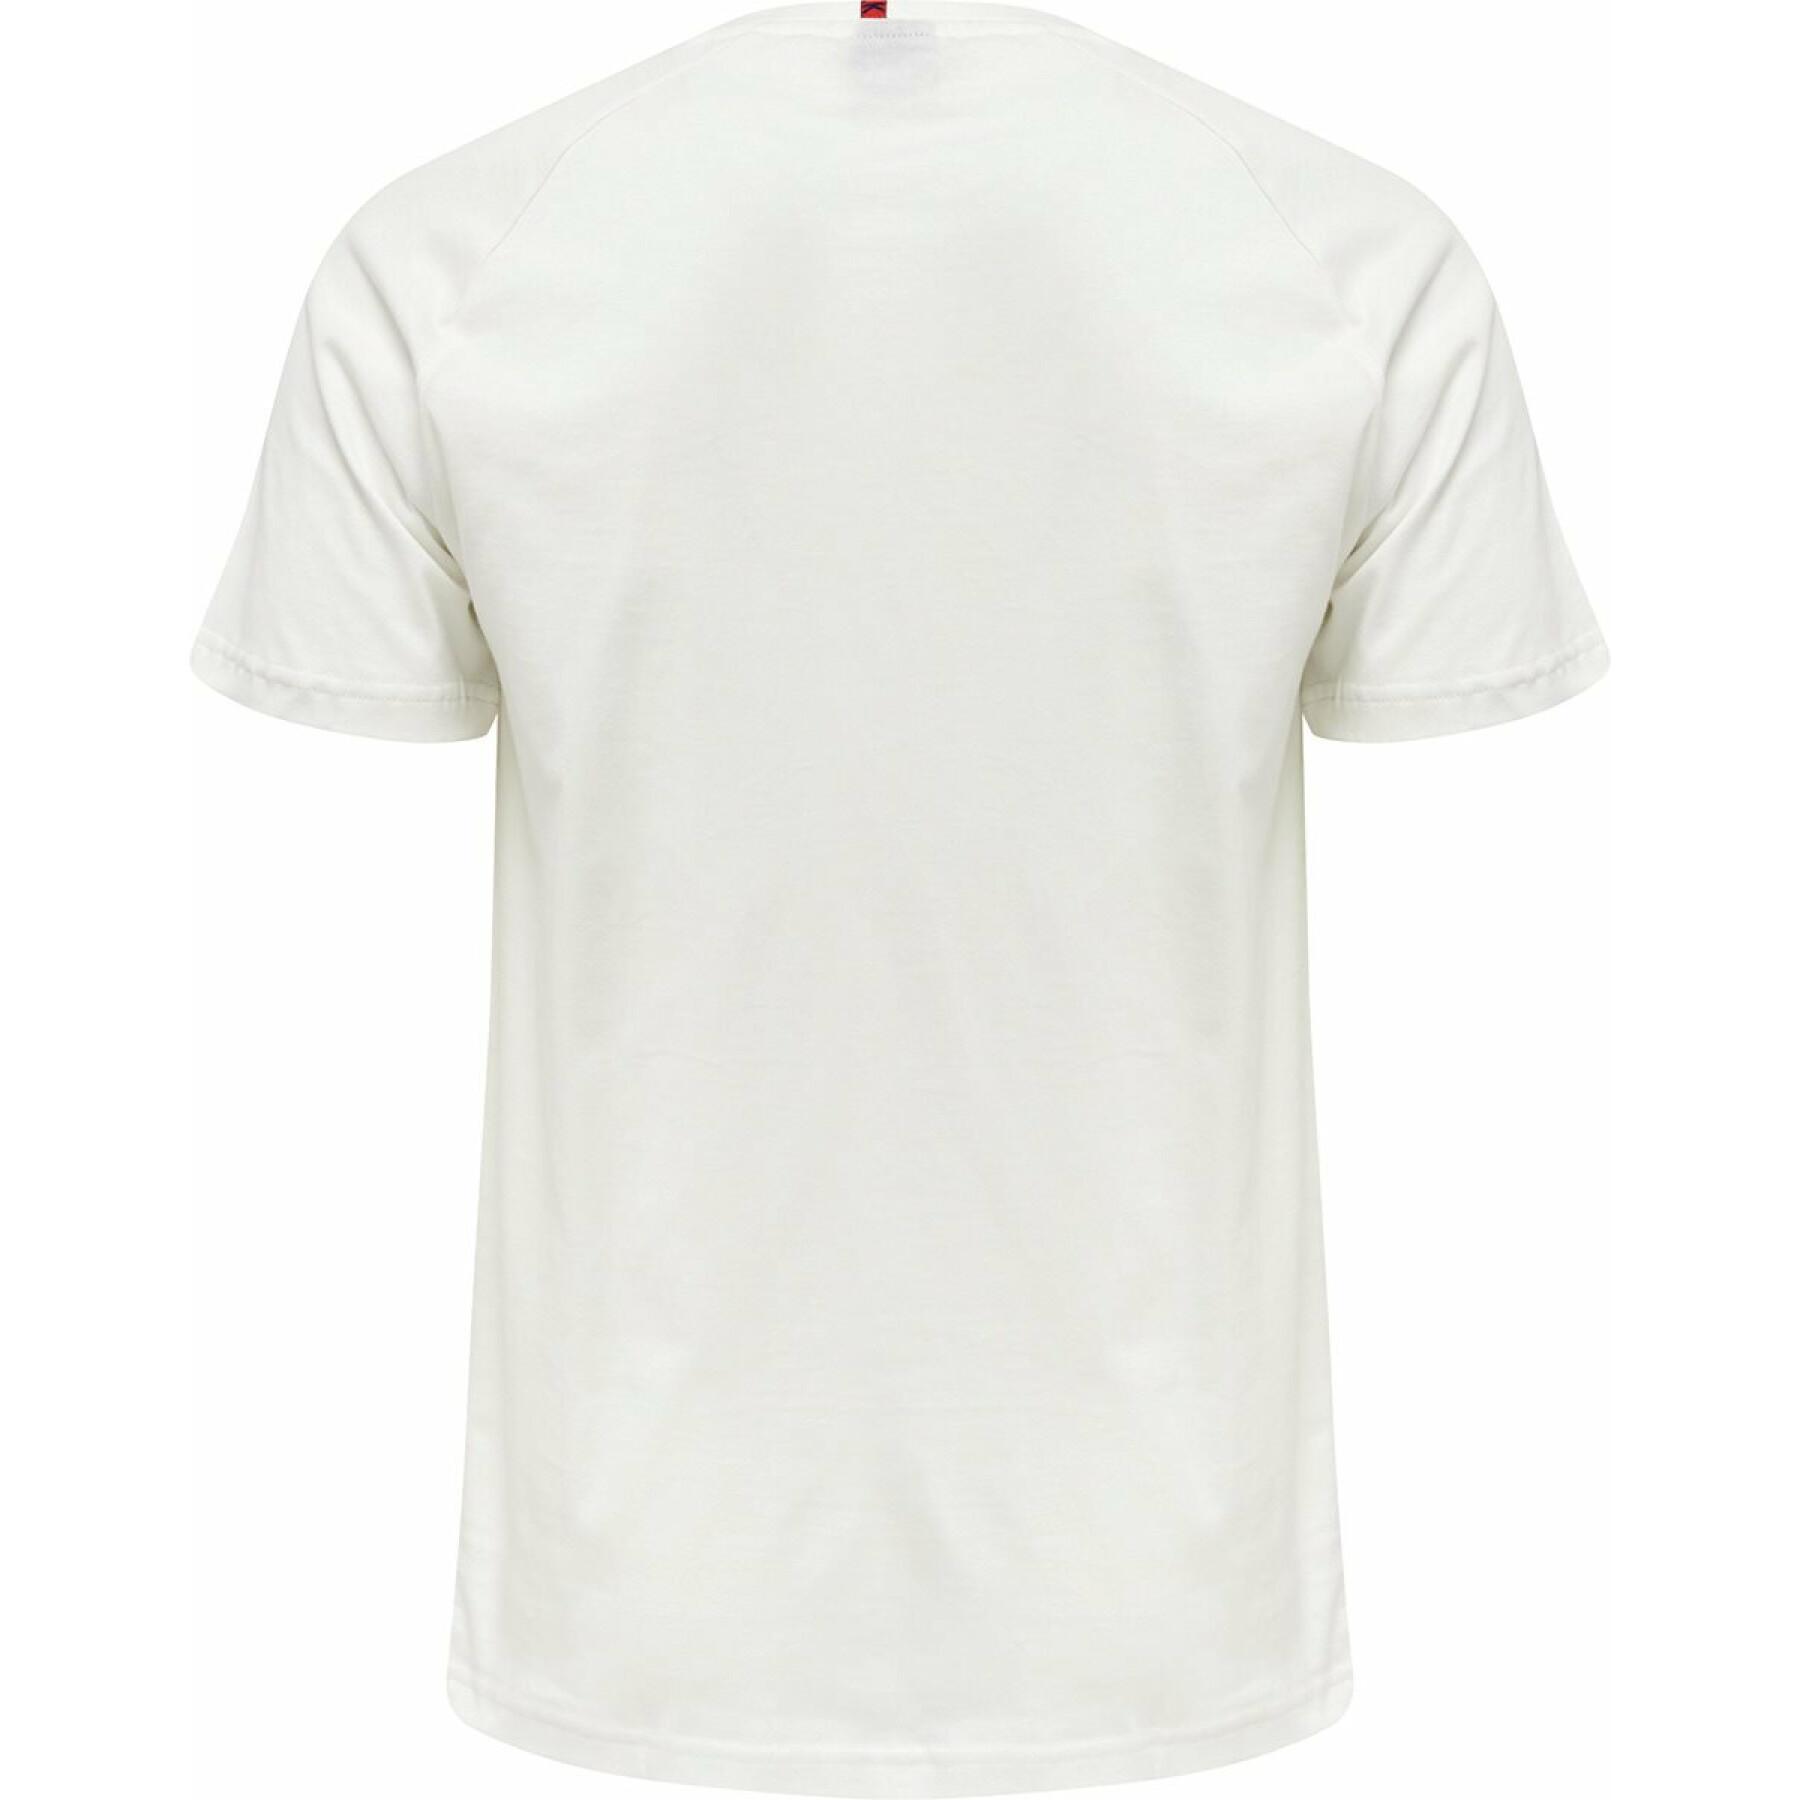 Camiseta hmlPRO xk cotton